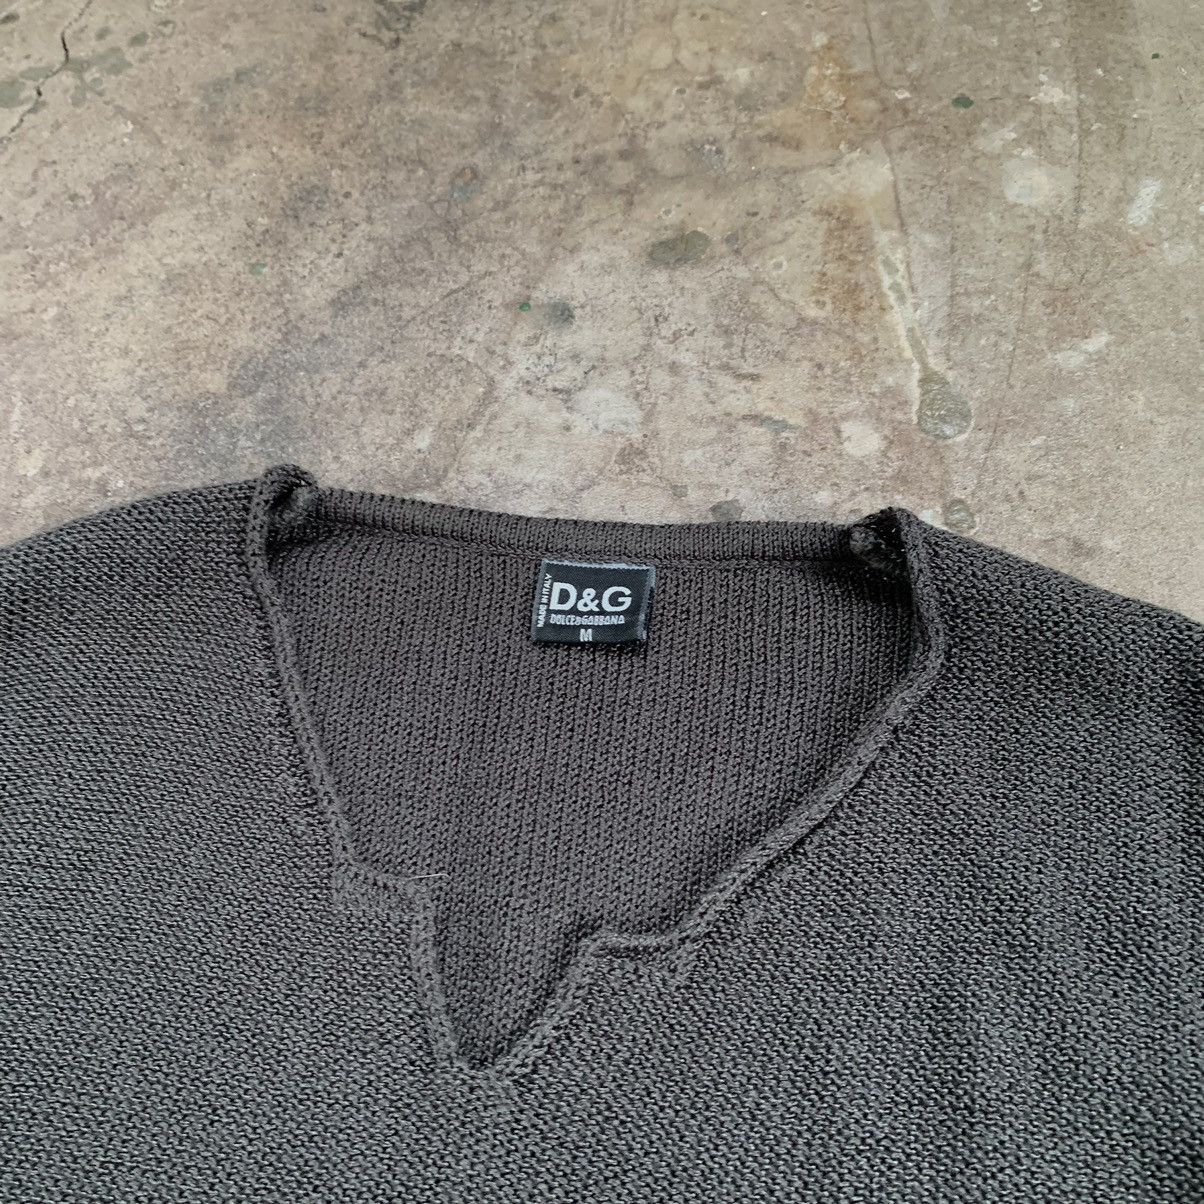 Vintage Dolce and gabbana vintage mesh sweater Size US M / EU 48-50 / 2 - 4 Thumbnail